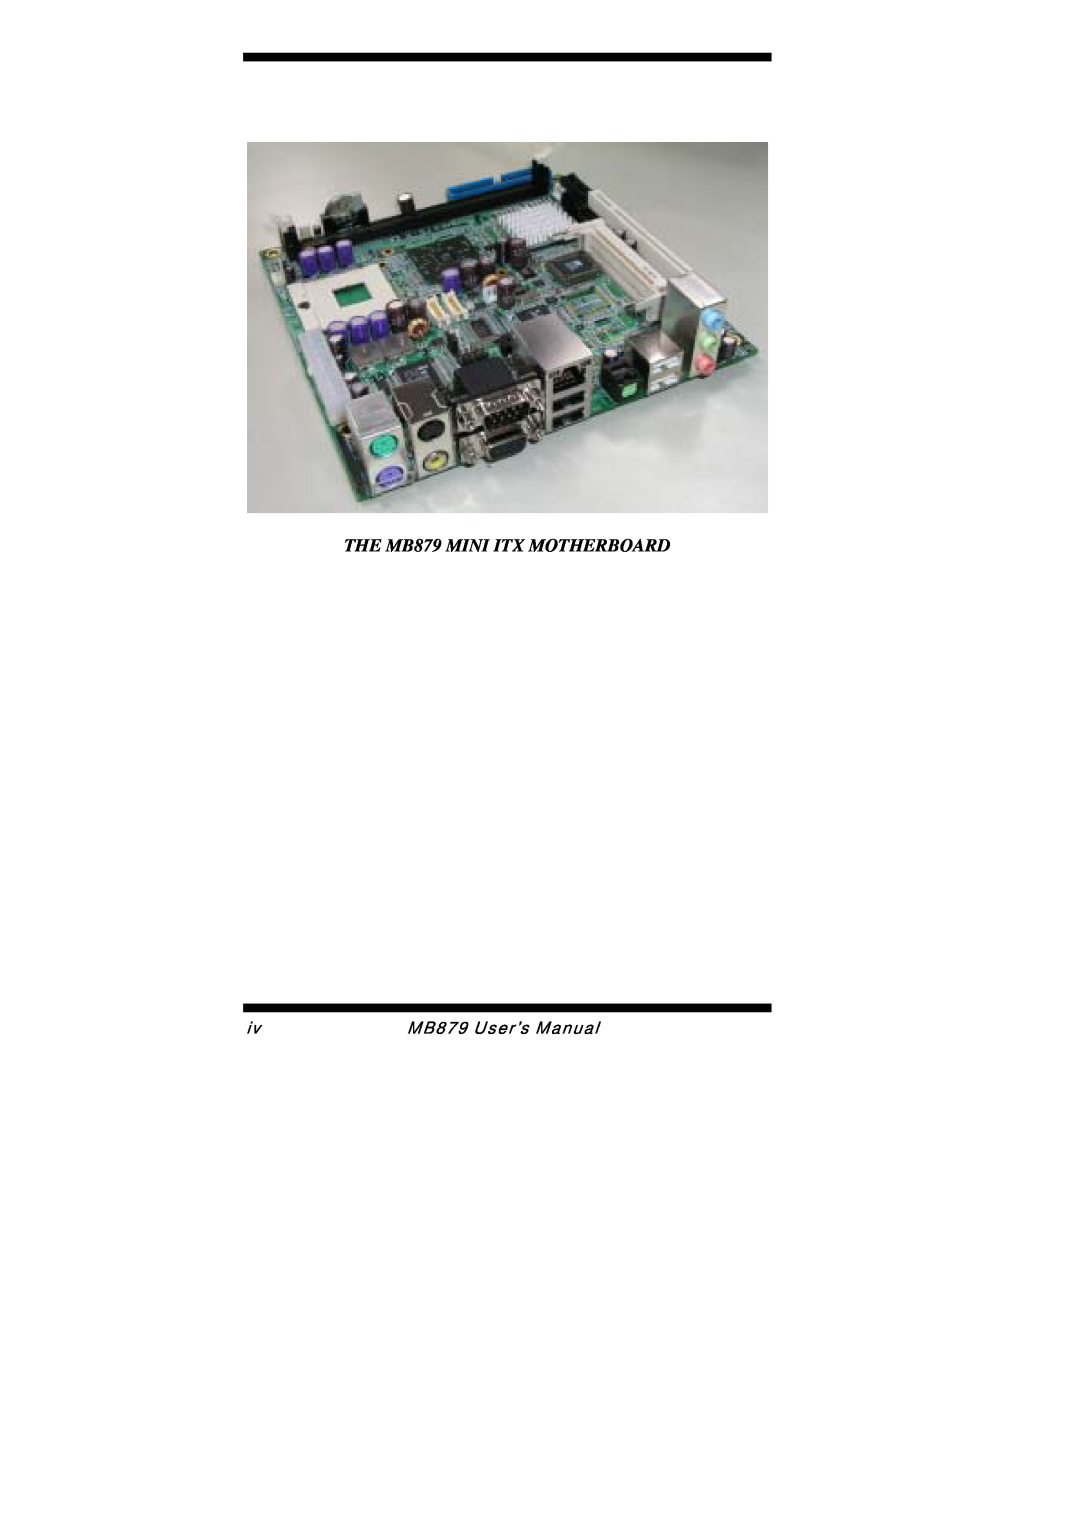 Intel user manual THE MB879 MINI ITX MOTHERBOARD, MB879 User’s Manual 